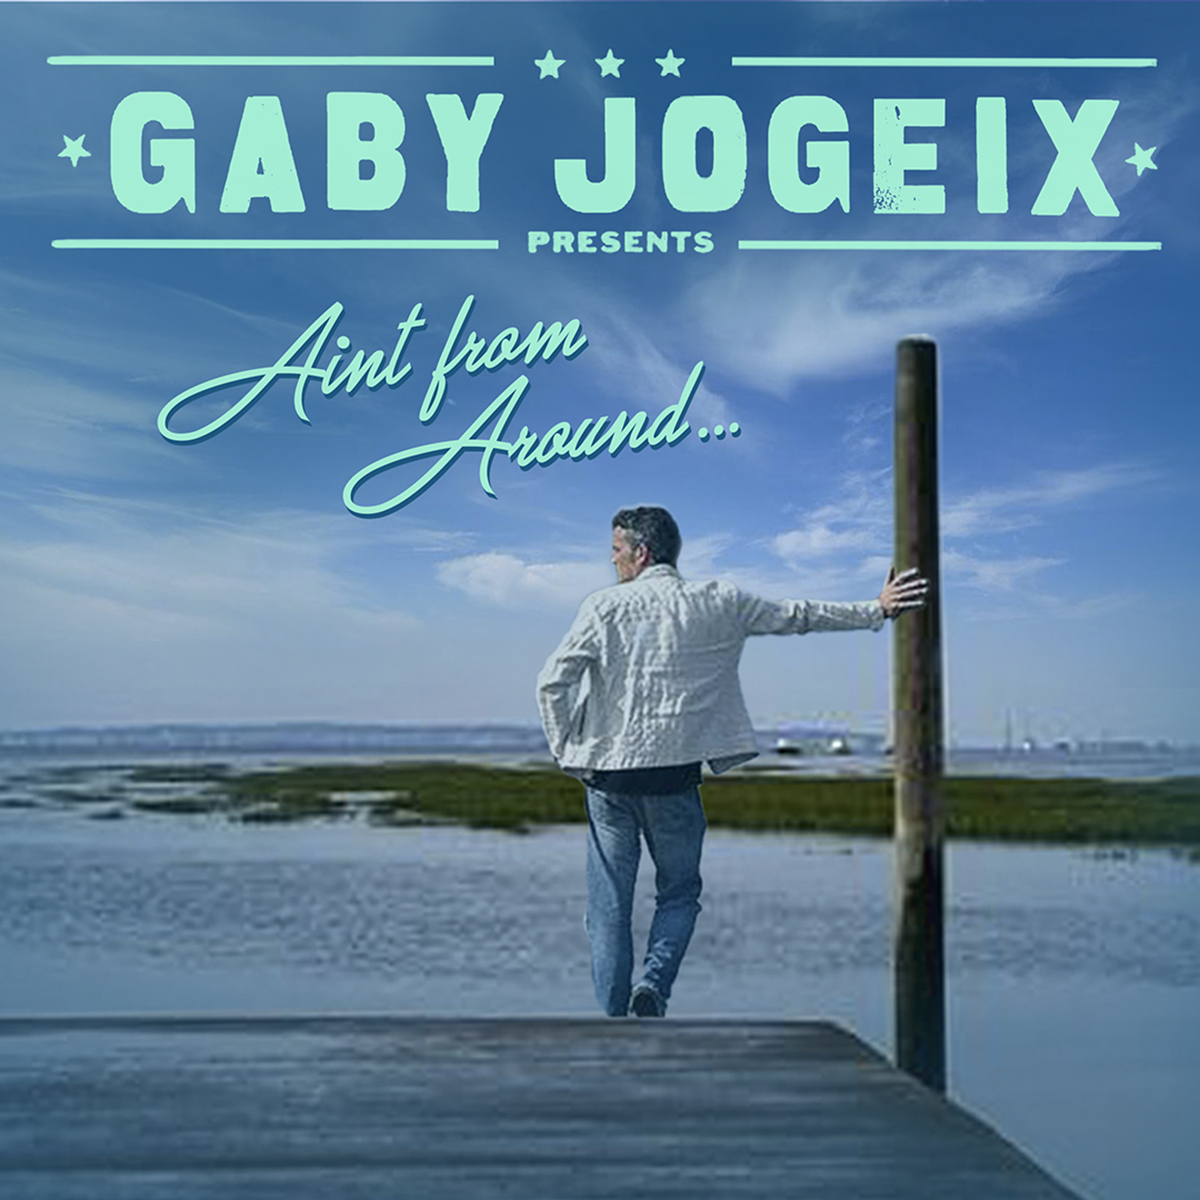 Gaby Jobiex “Ain’t From Around” Single Artwork